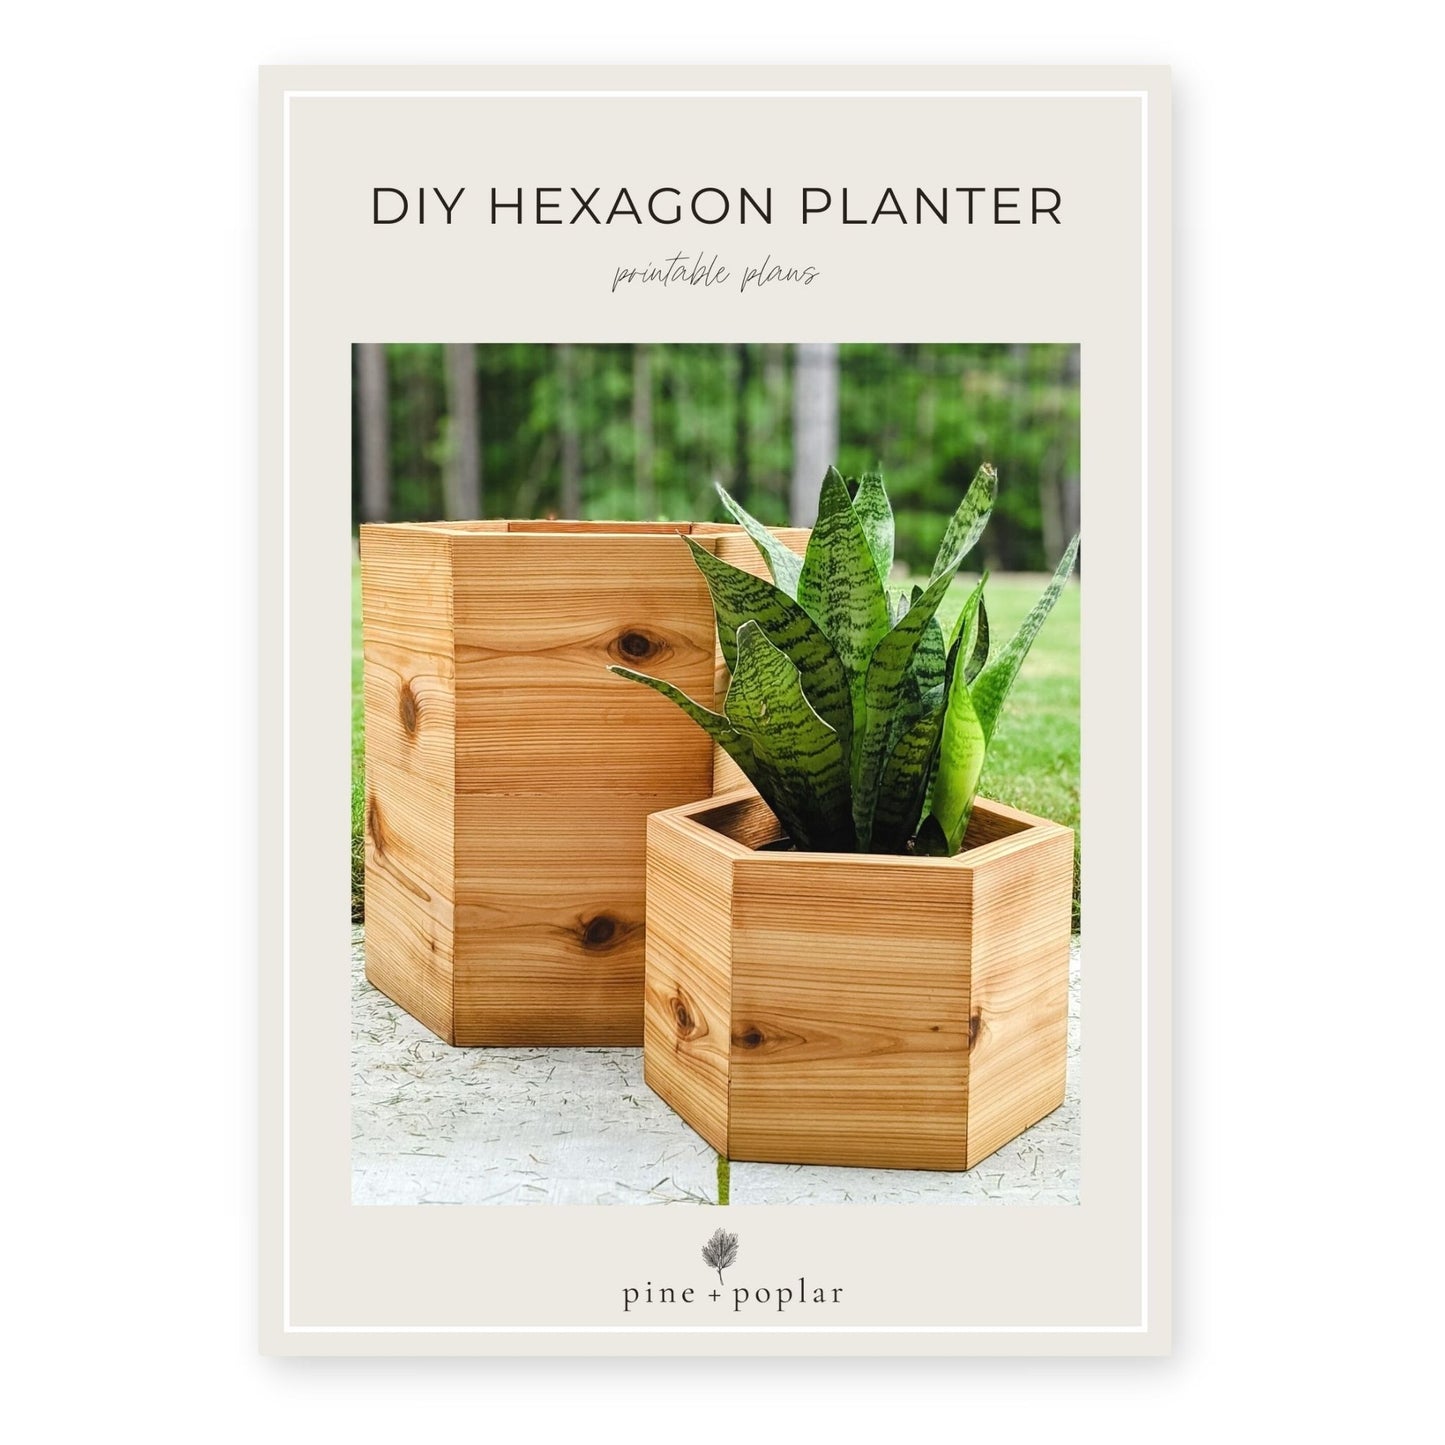 Hexagon Planters Printable Plans